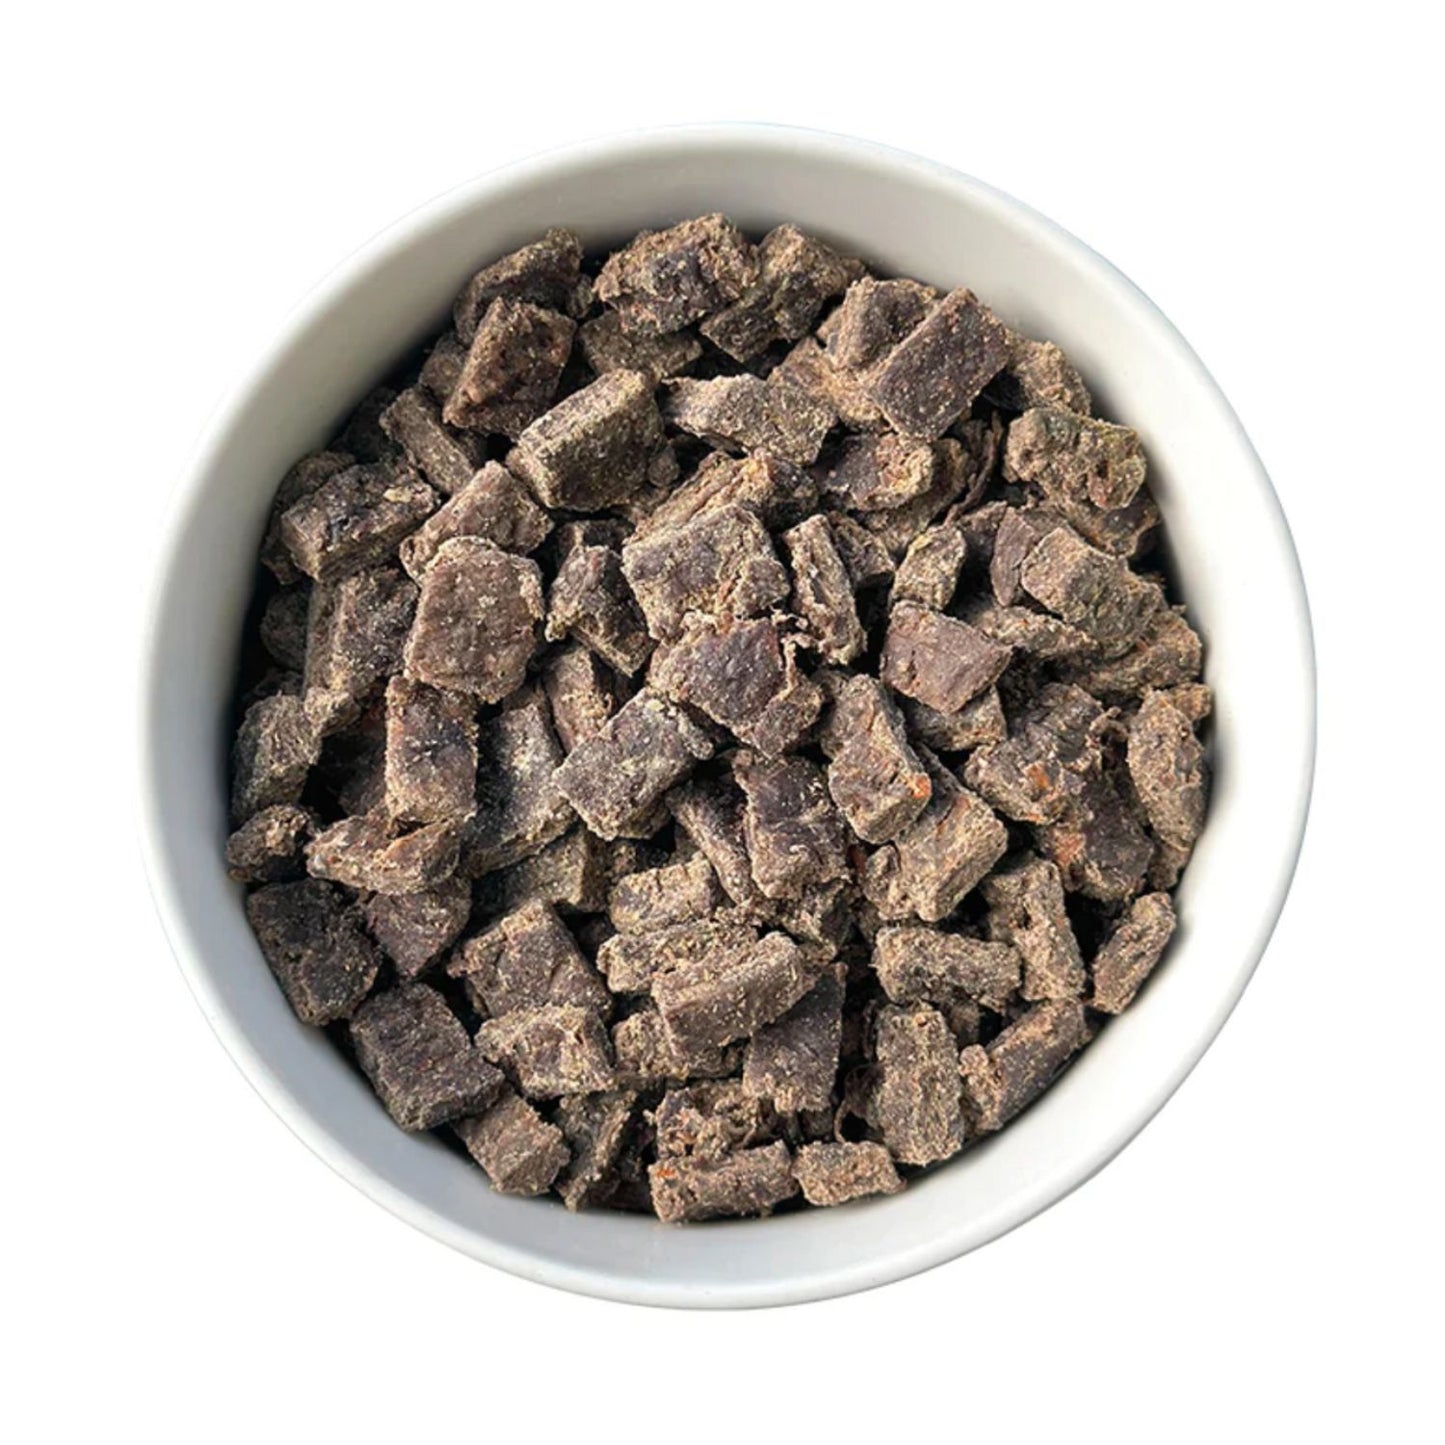 SPD Air Dried Dog Food | Lamb & Rosemary